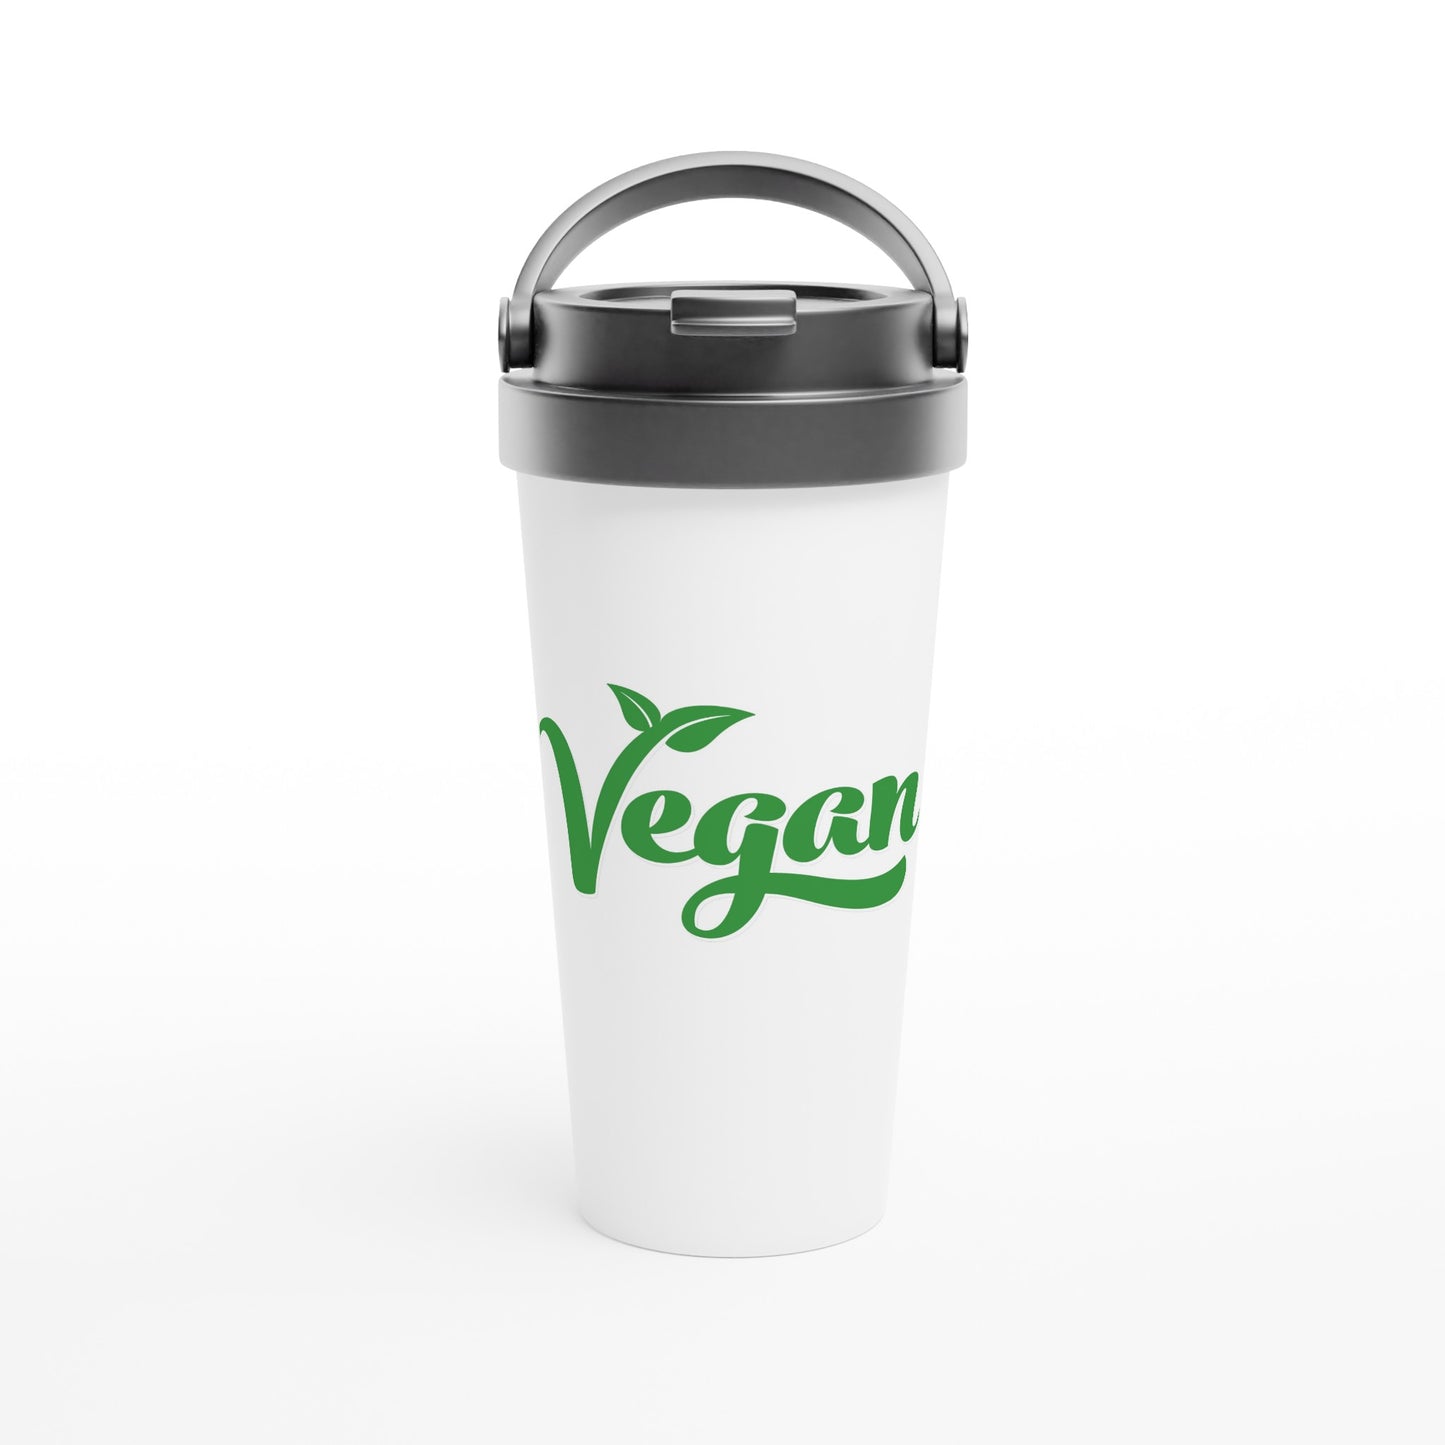 Vegan -15oz Stainless Steel Travel Mug